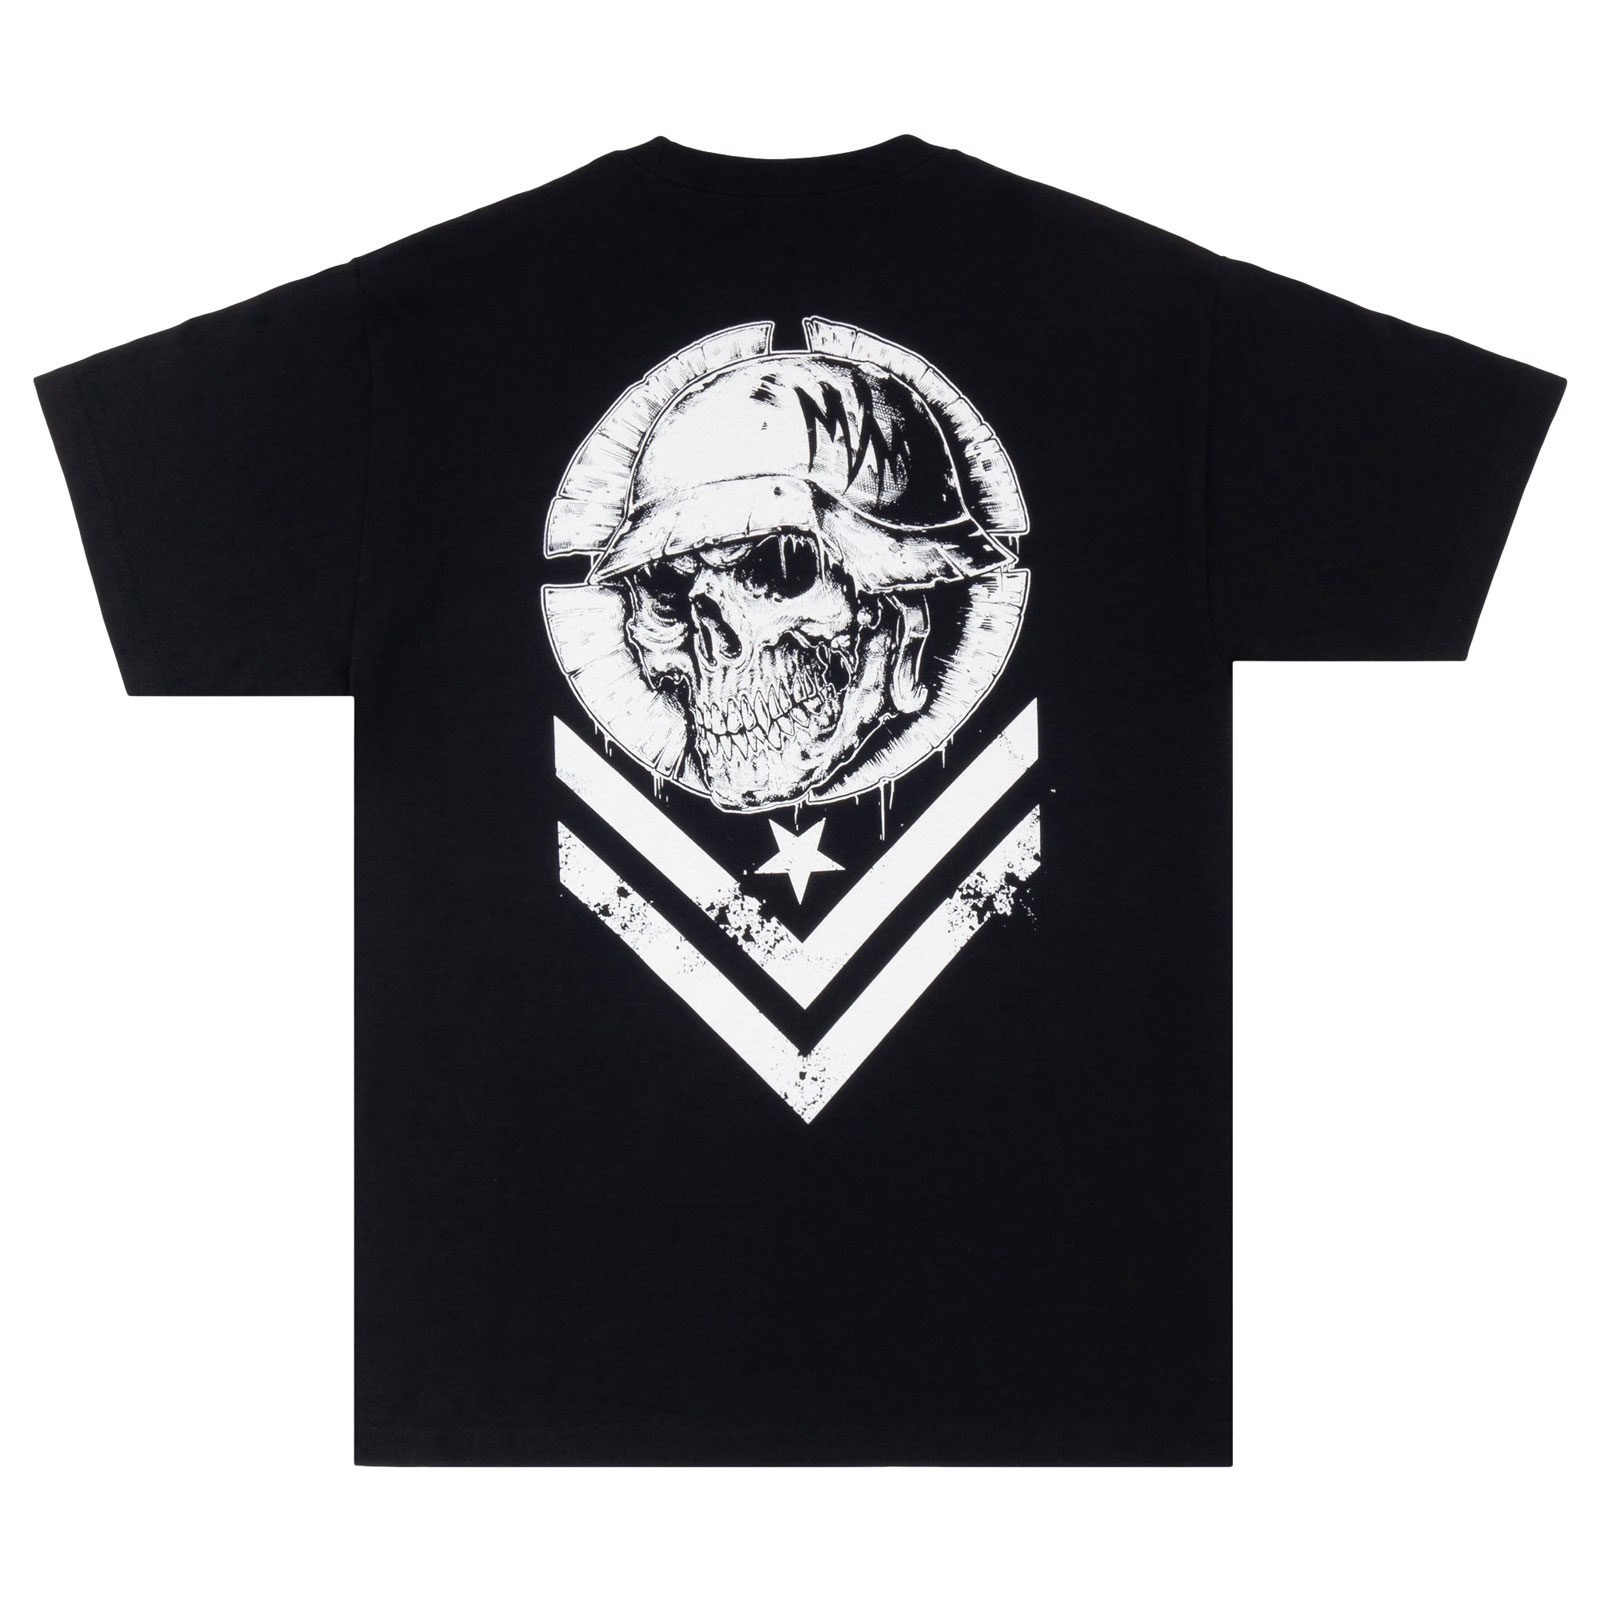 Metal Mulisha Men's Patriot Chevron Short Sleeve T Shirt Black Clothing Appar...